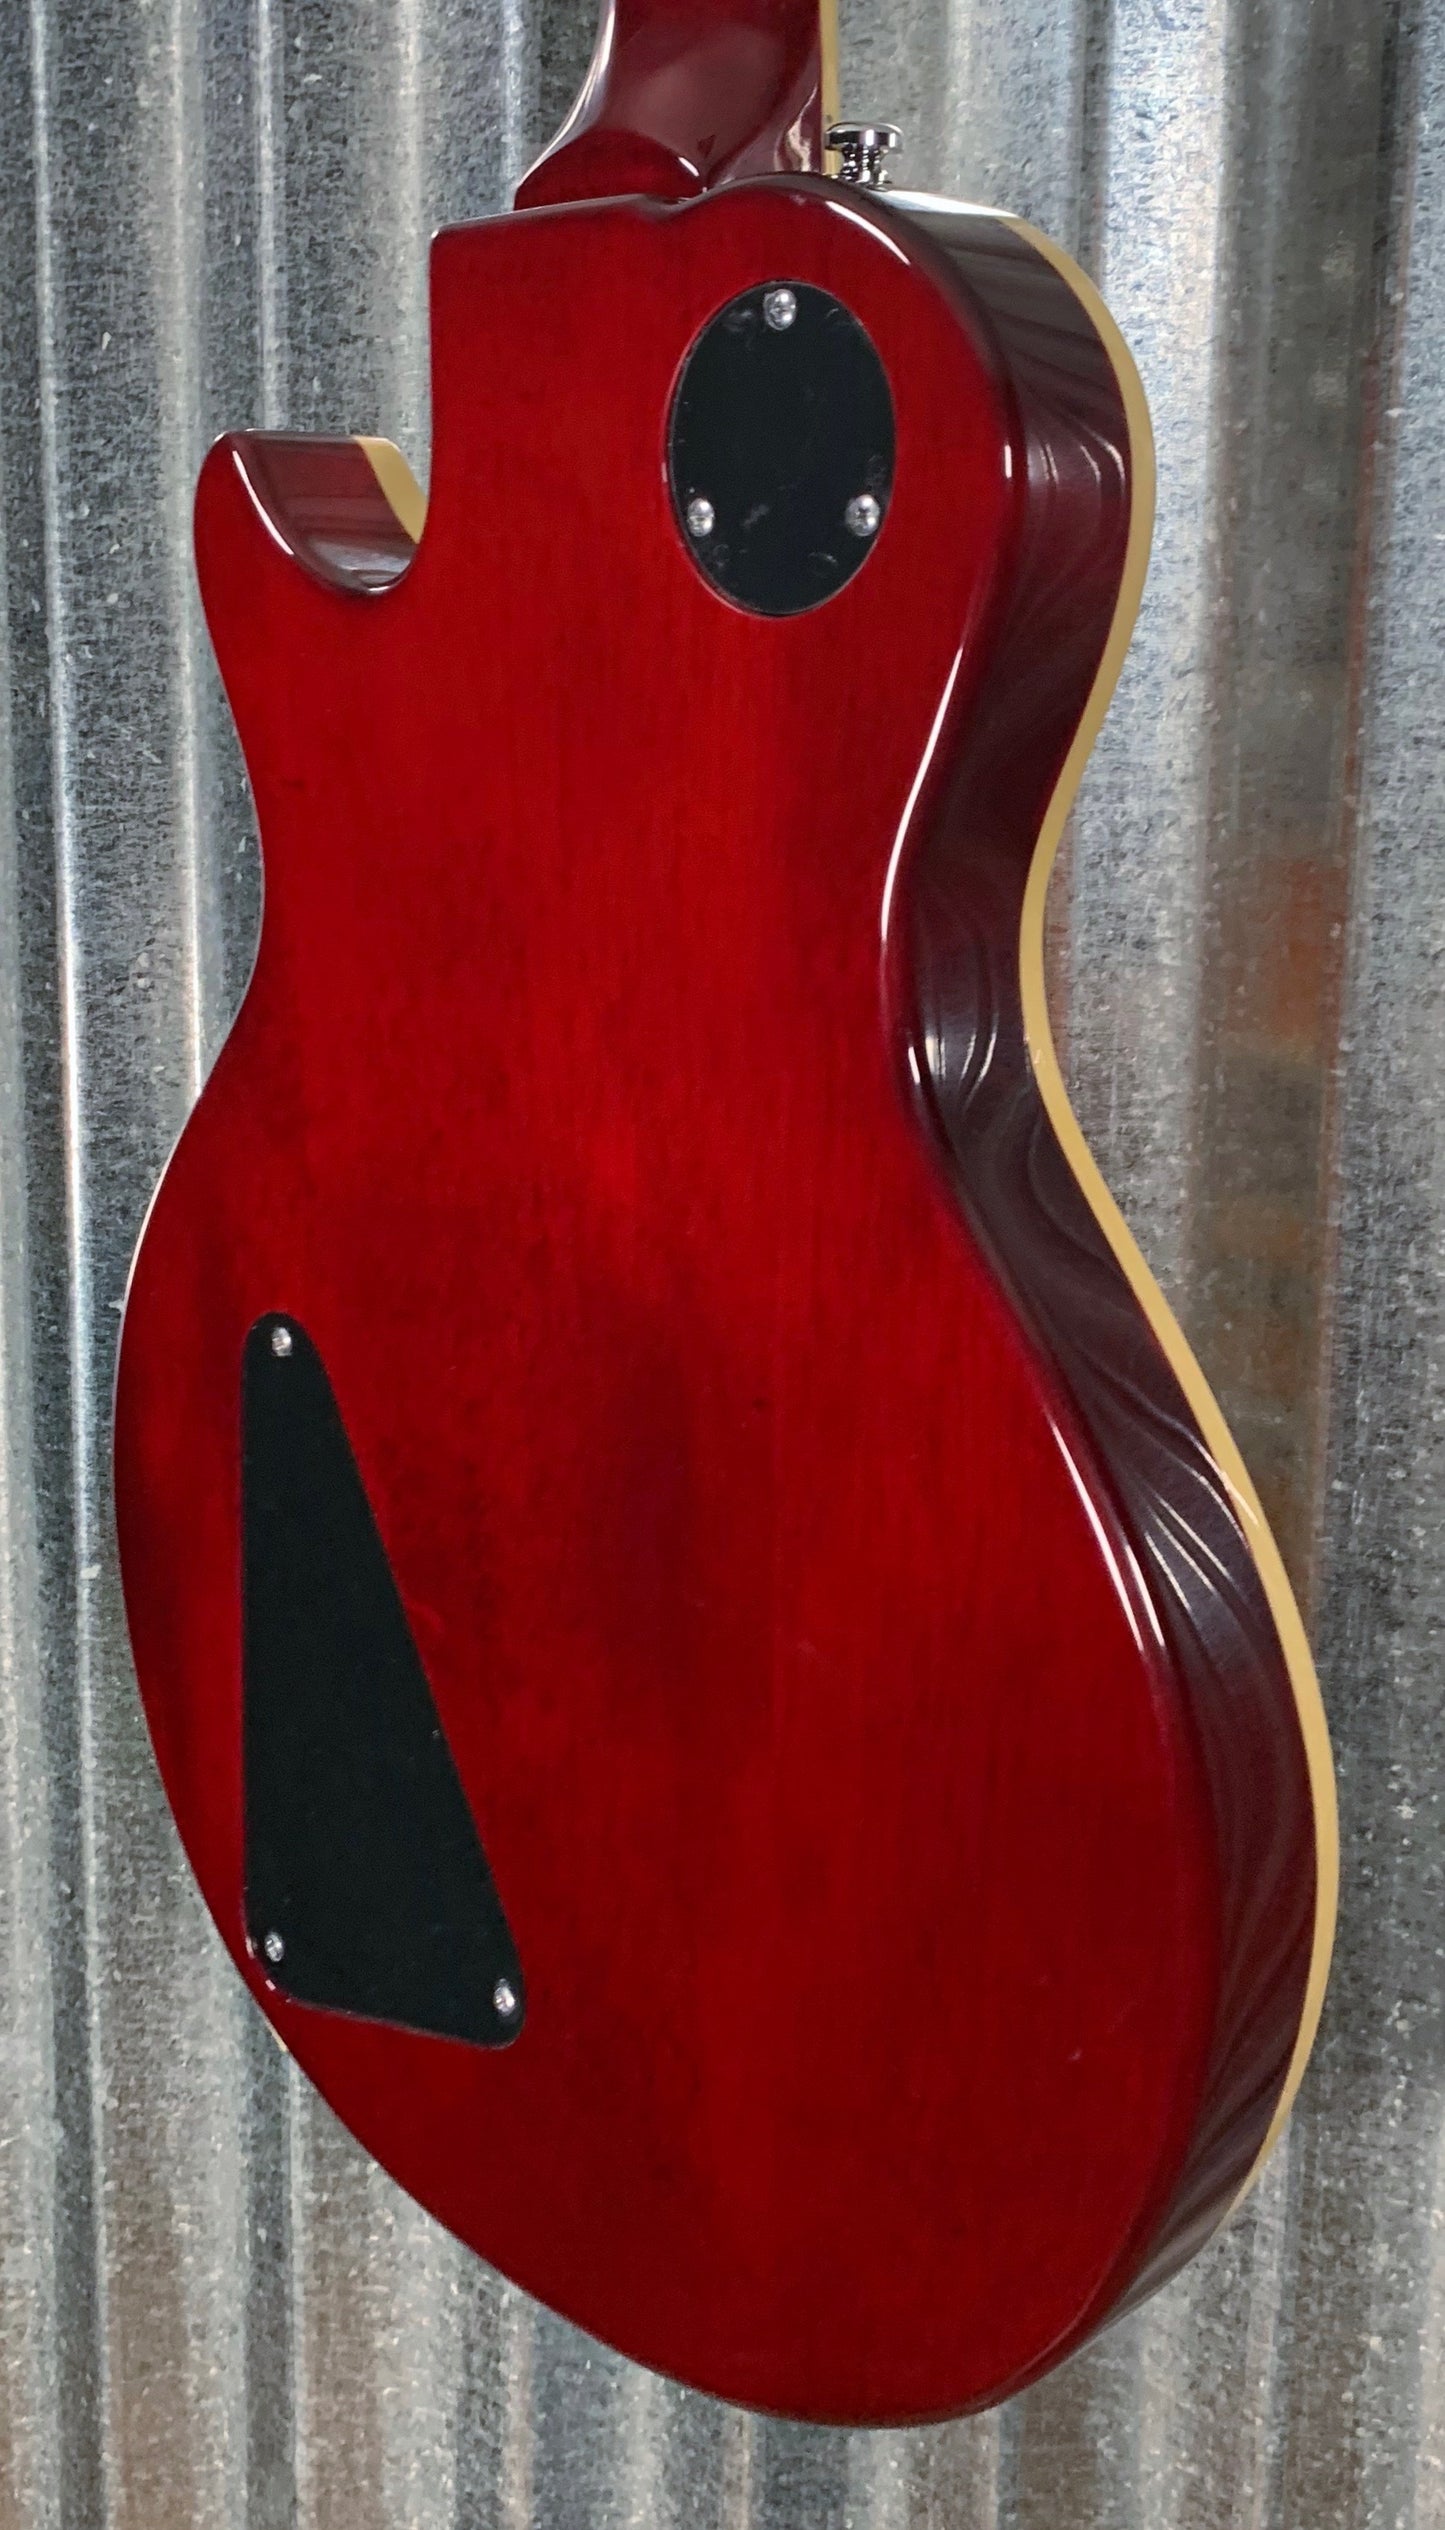 Hamer Monaco Single Cut Cherry Sunburst Electric Guitar MONF-CS #1983